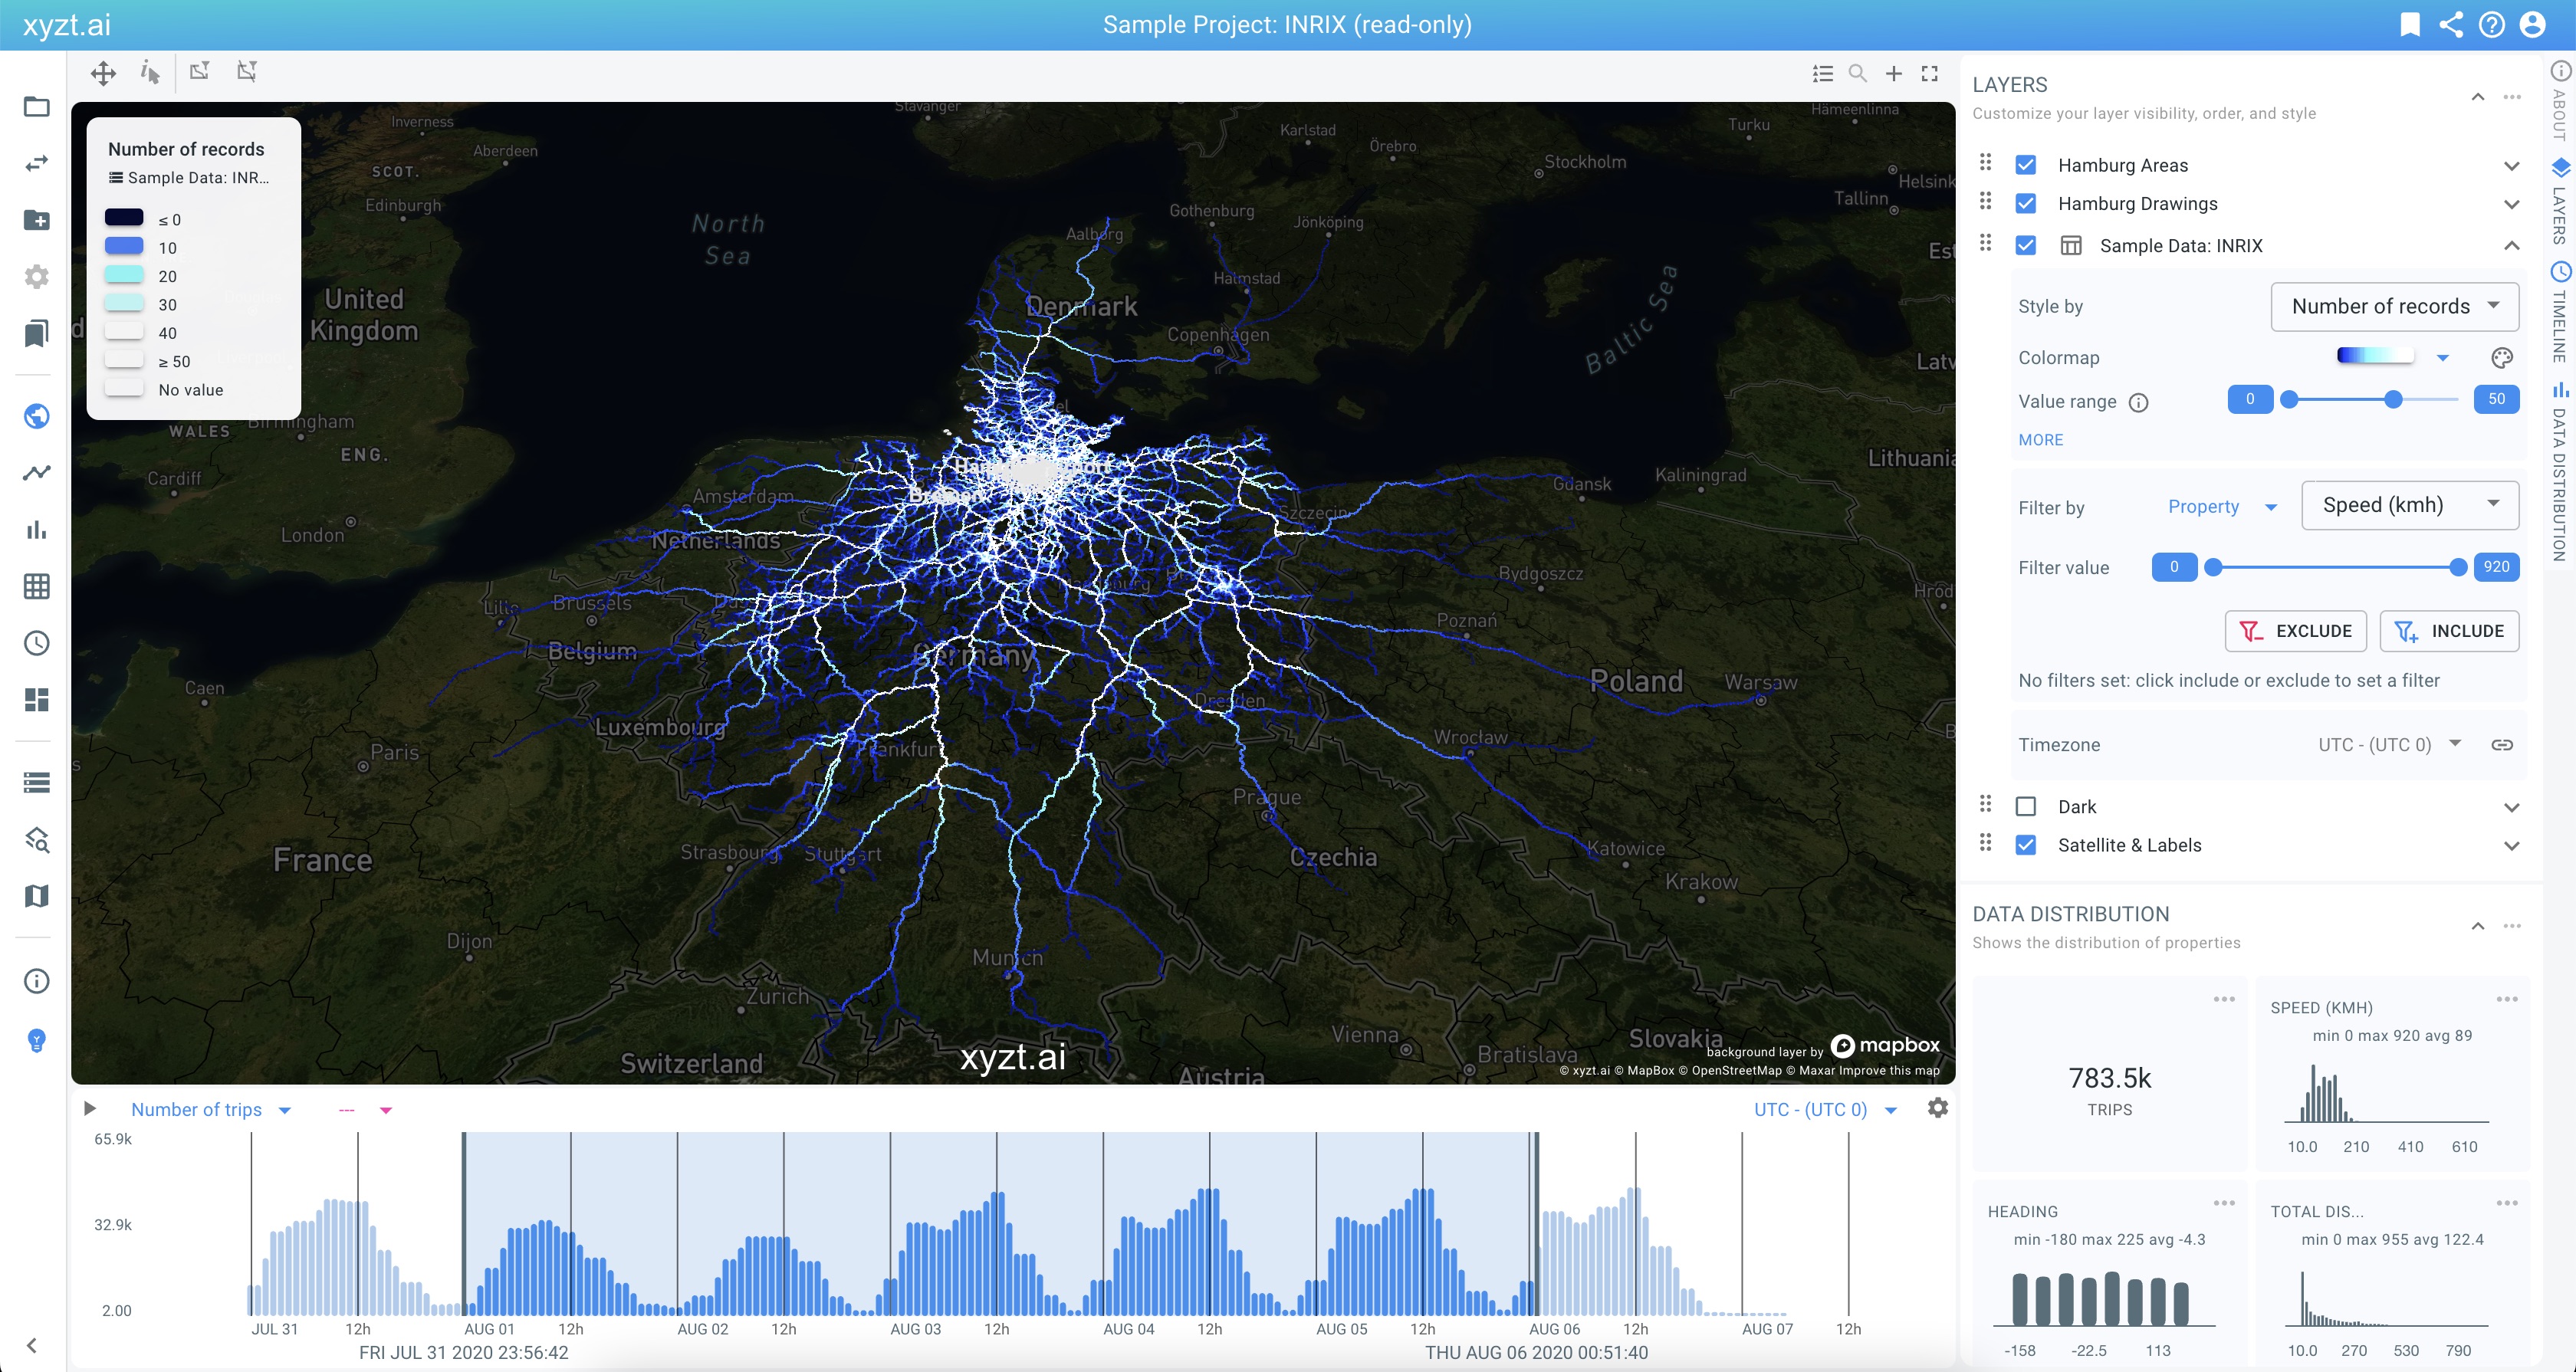 Movement data: floating vehicle data for traffic analysis